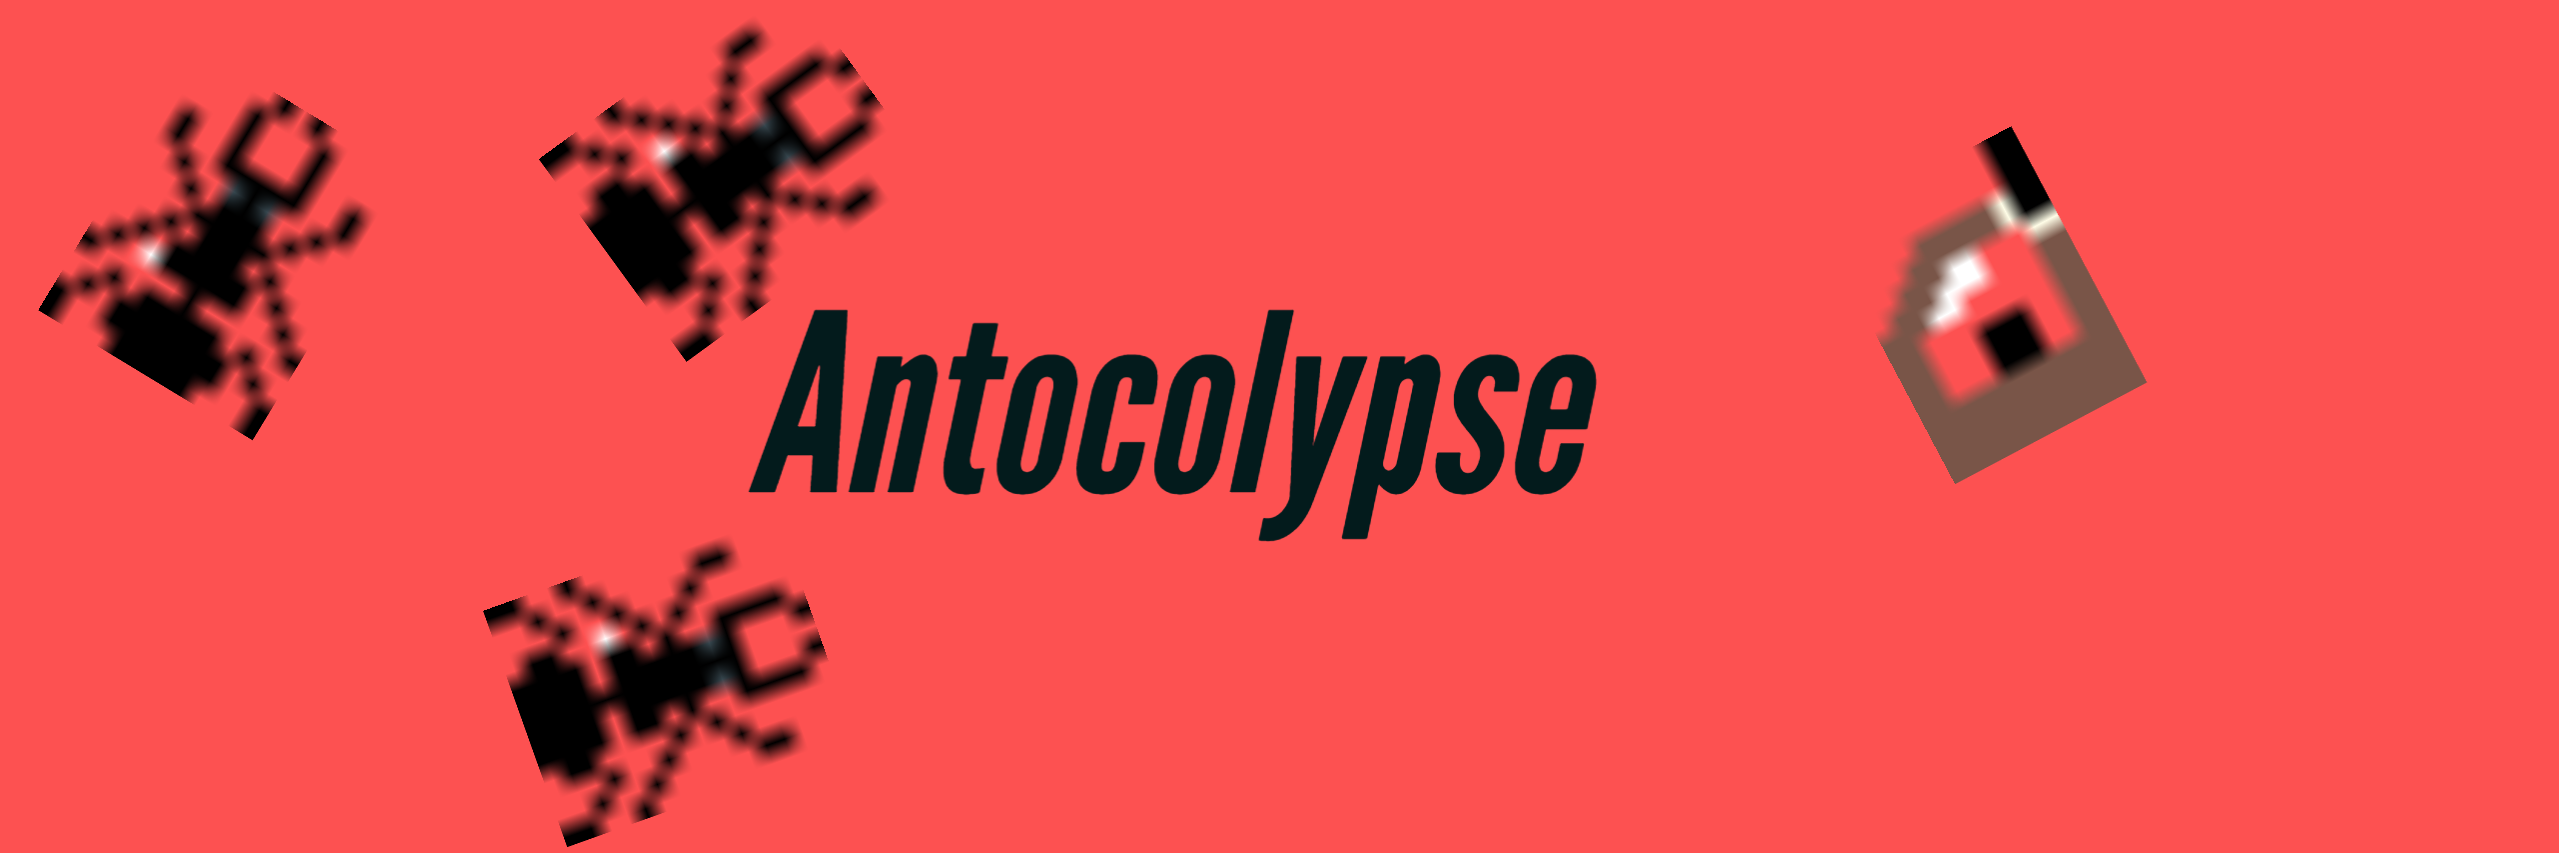 Antocolypse